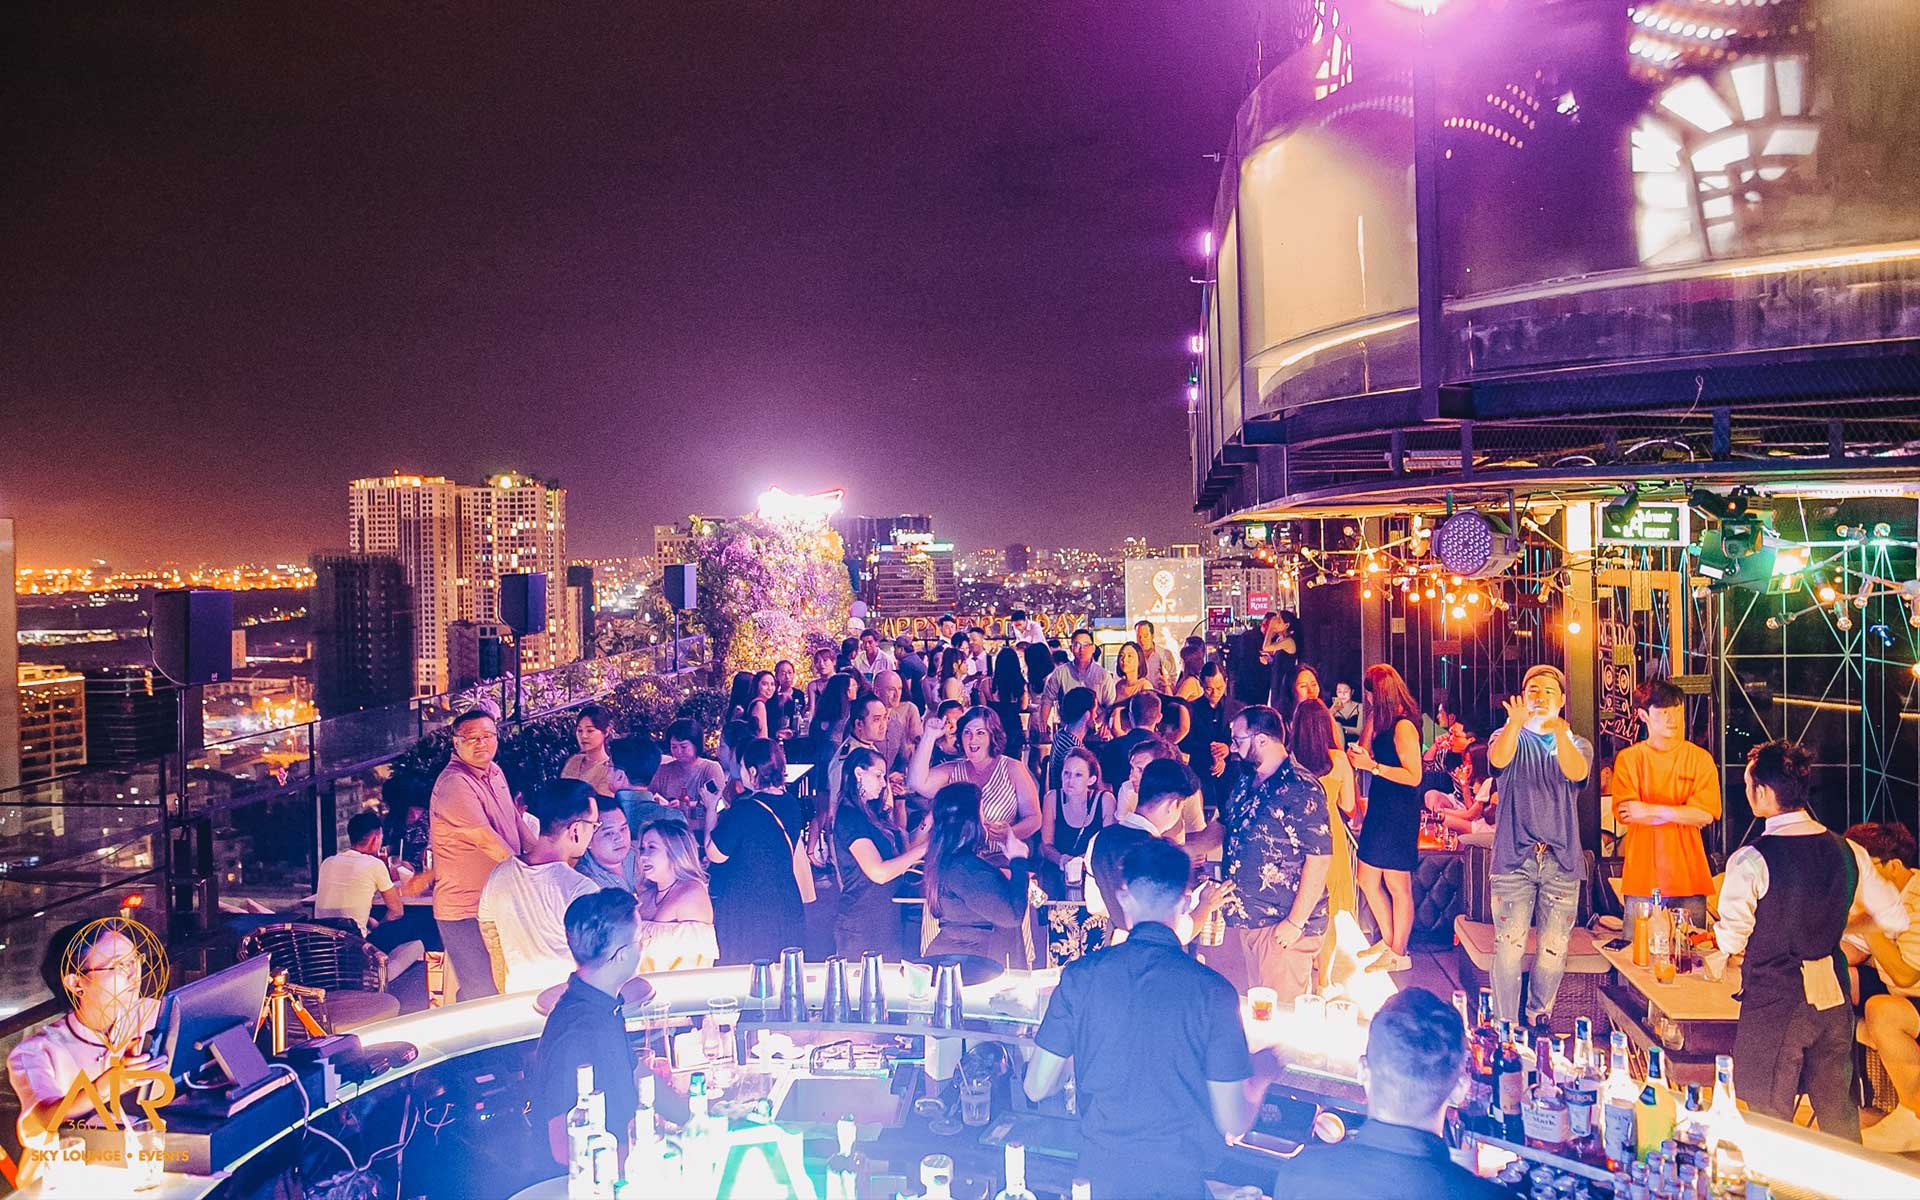 Air Saigon's rooftop bar